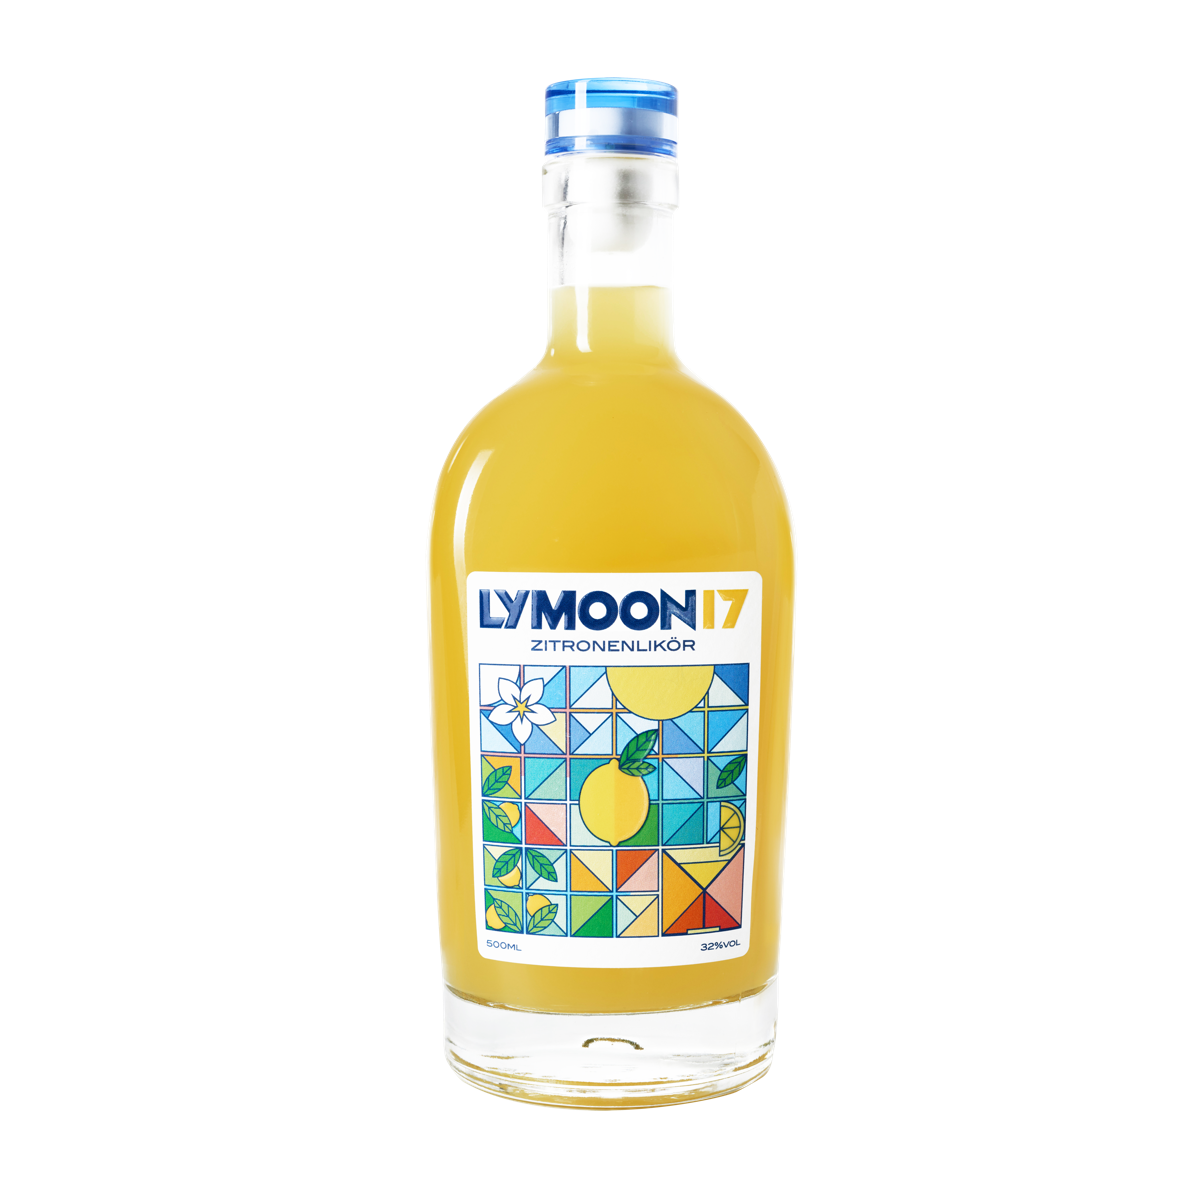 LYMOON 17 Zitronenlikör / Limoncello